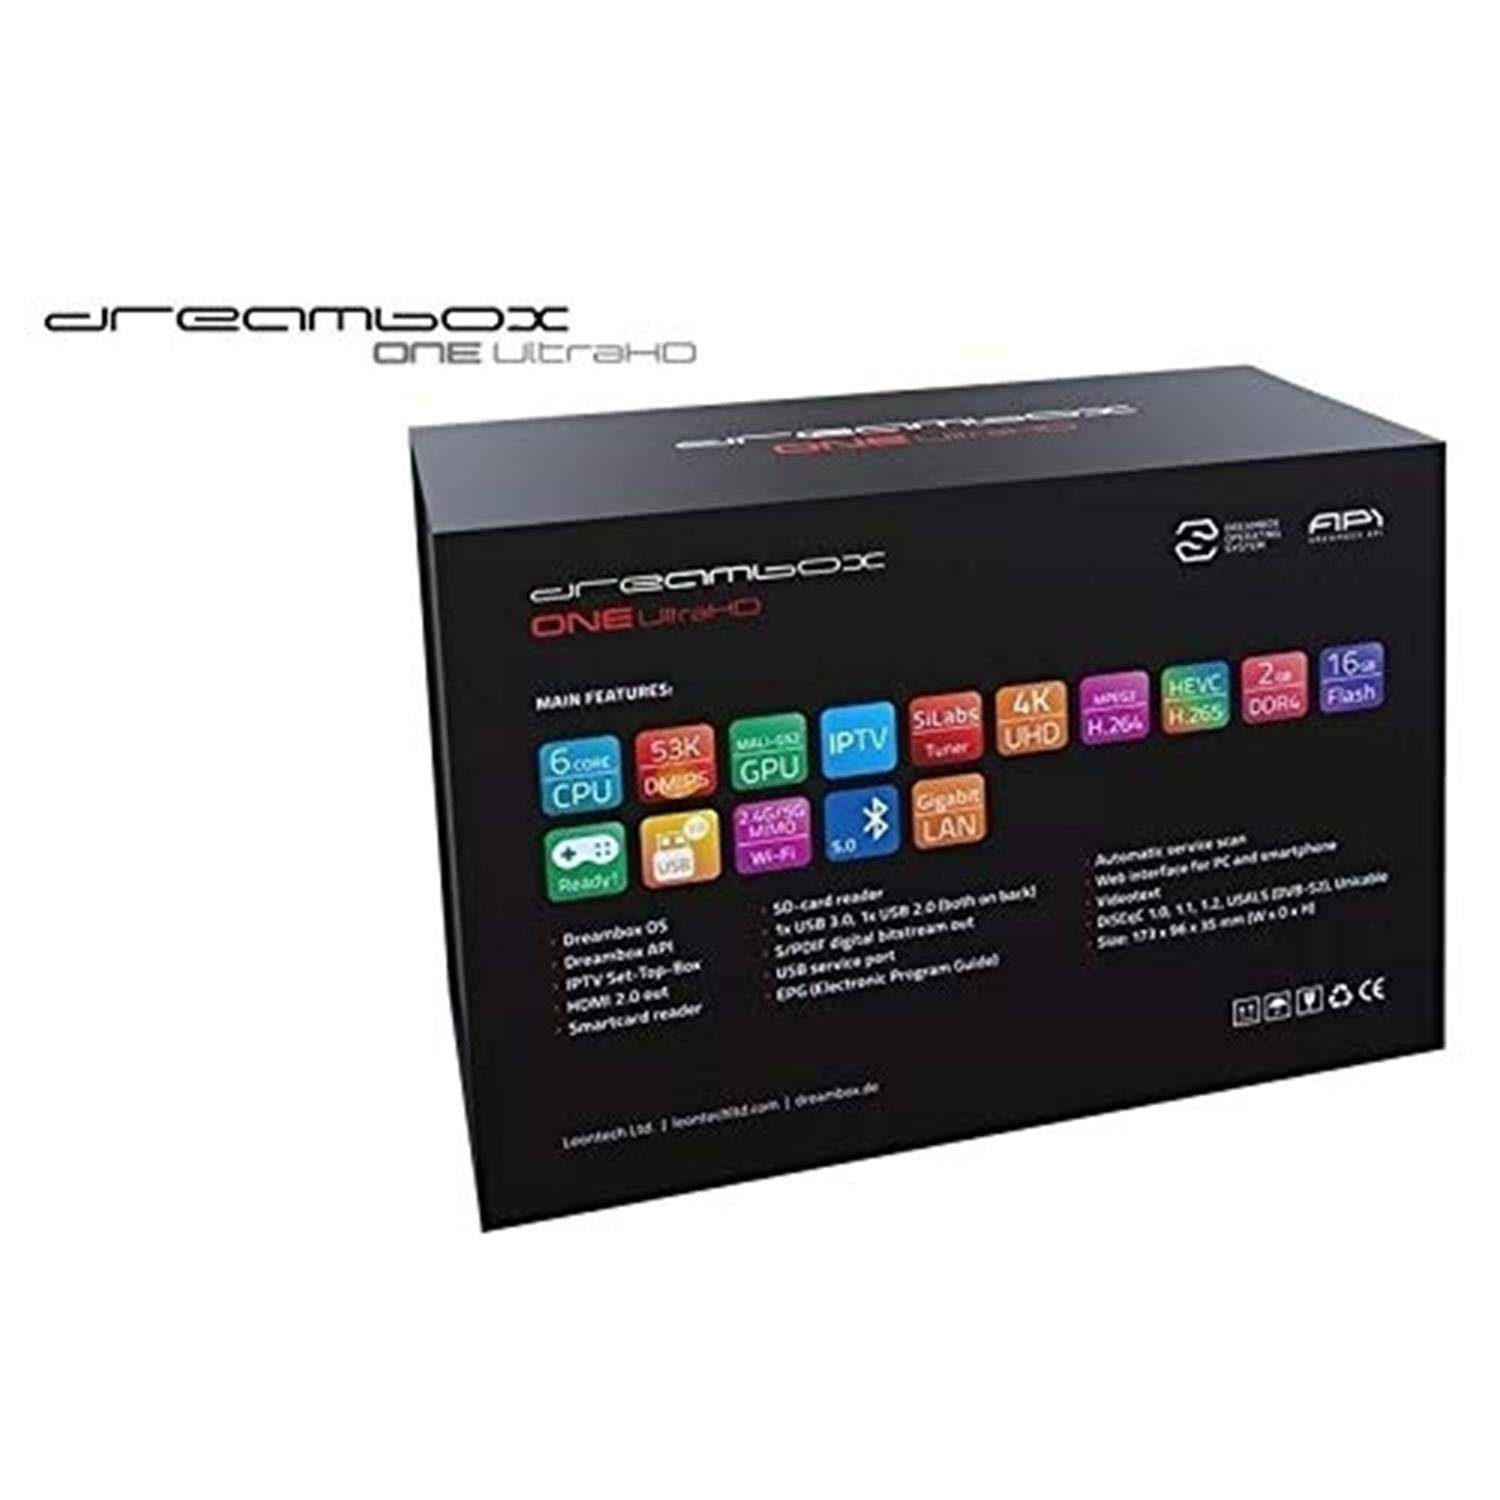 Dreambox Dreambox One E2 HD (4K, Multistream Tuner Satellitenreceiver 2x DVB-S2X 2160p, Ultra